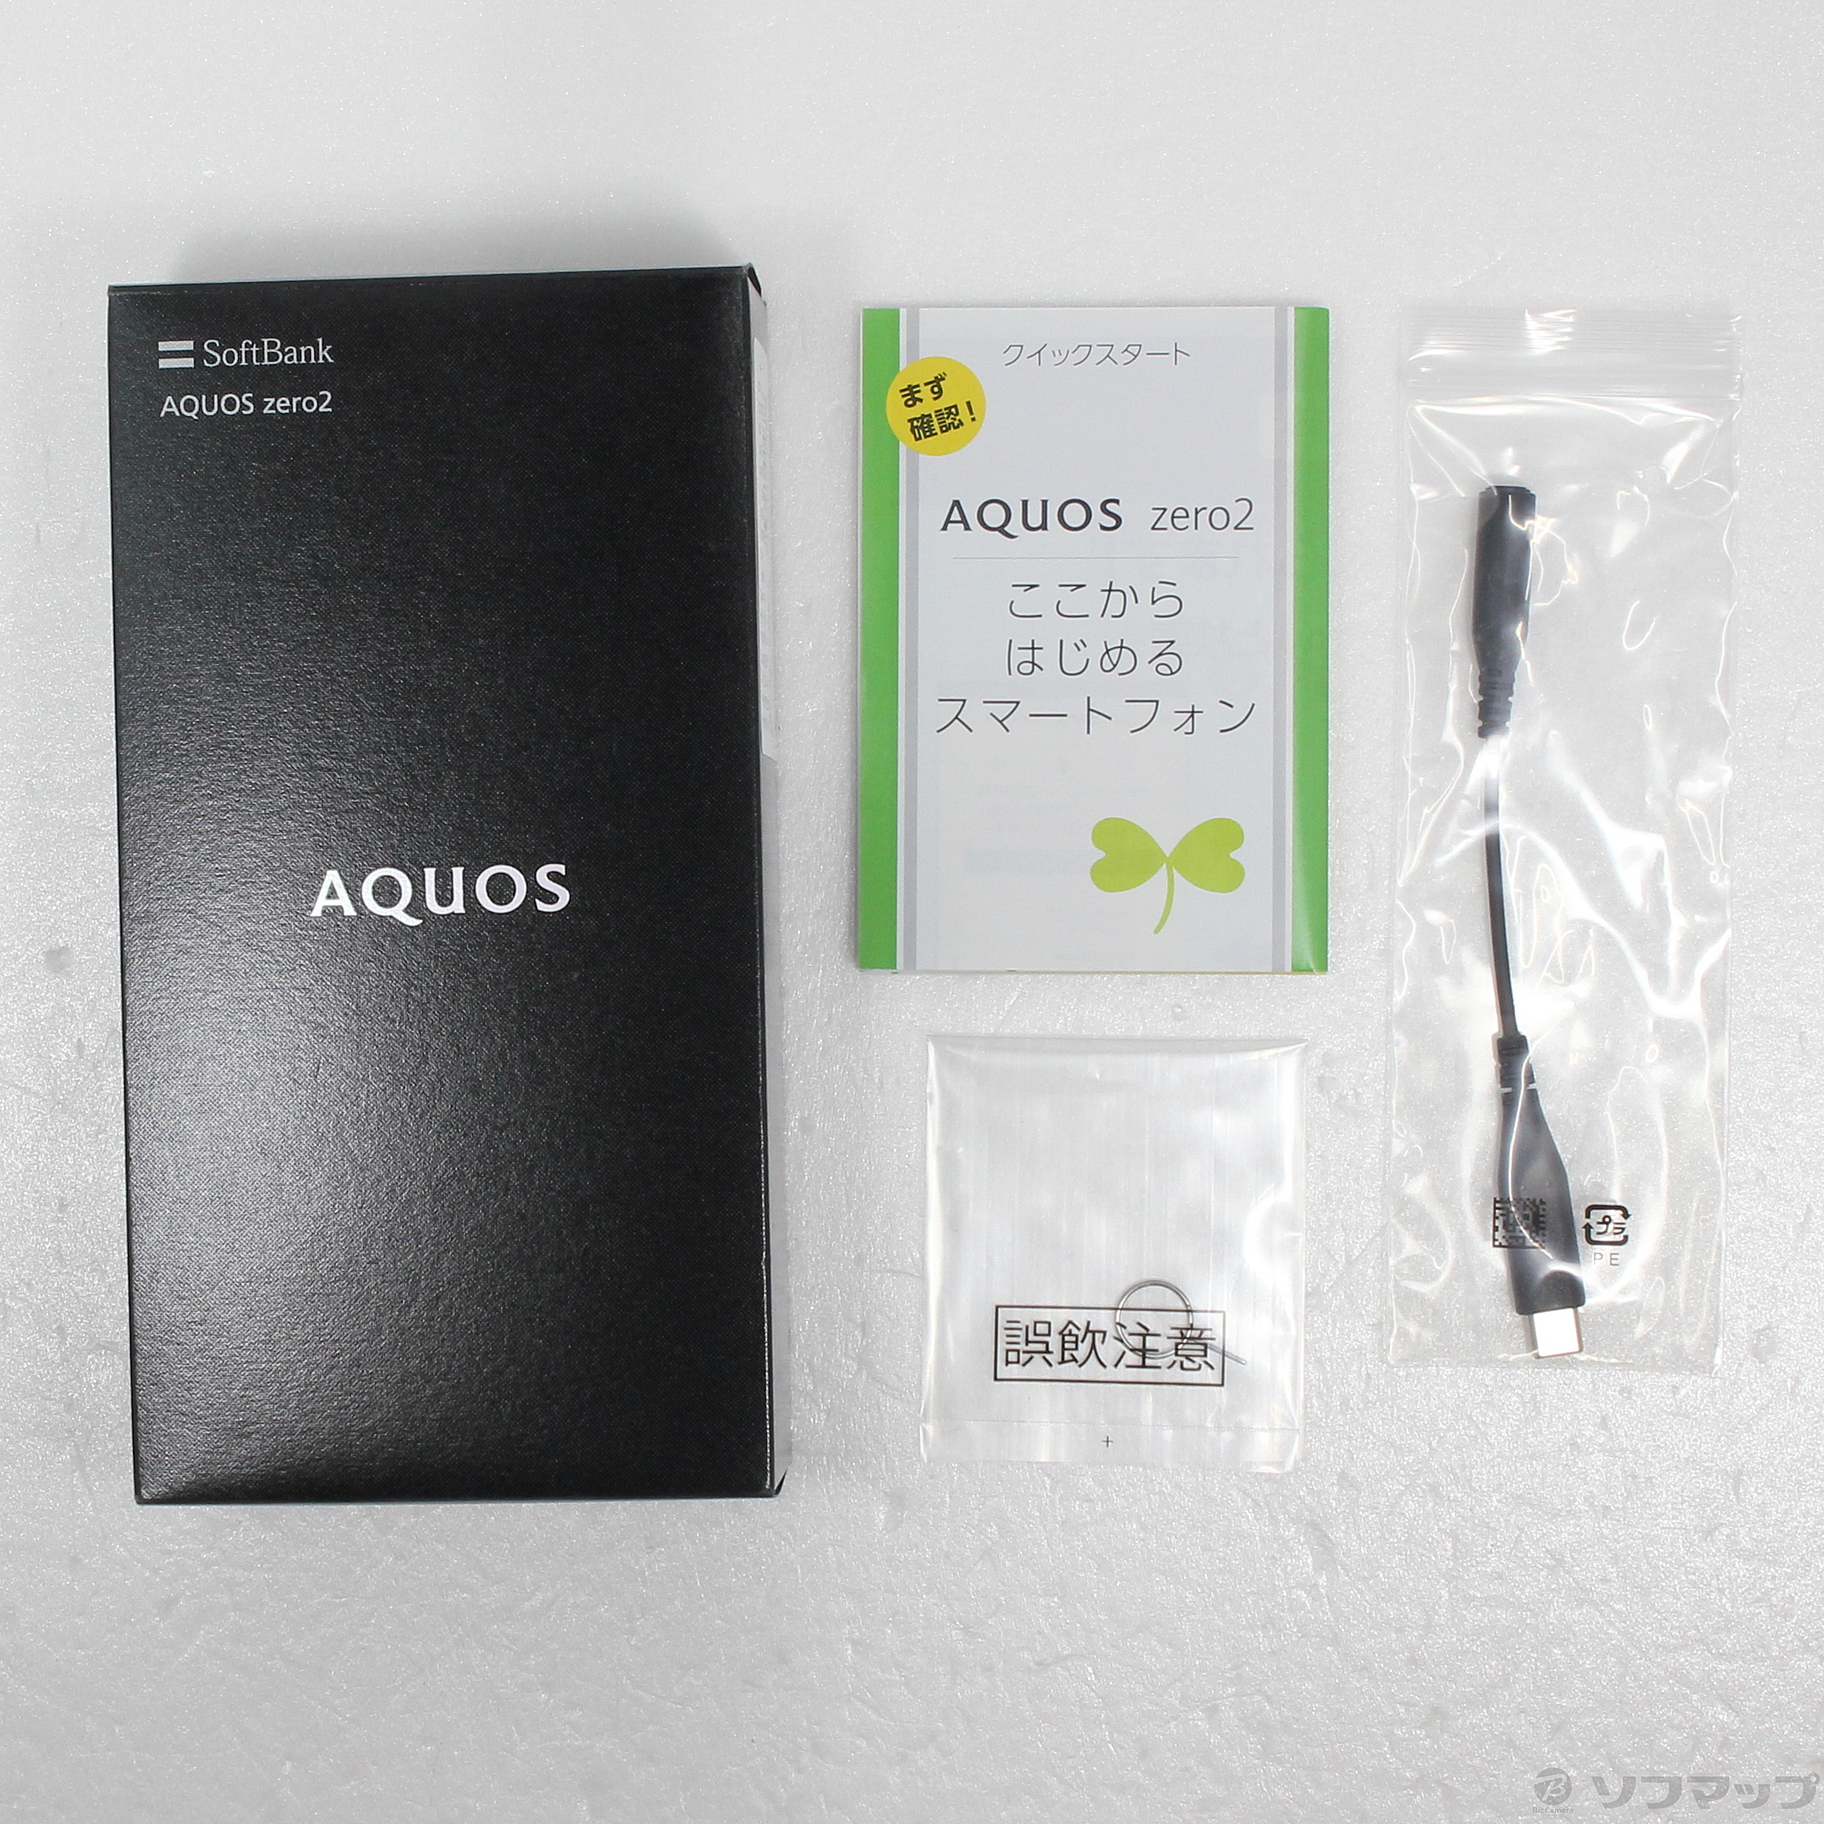 AQUOS zero2 アストロブラック 256 GB Softbank